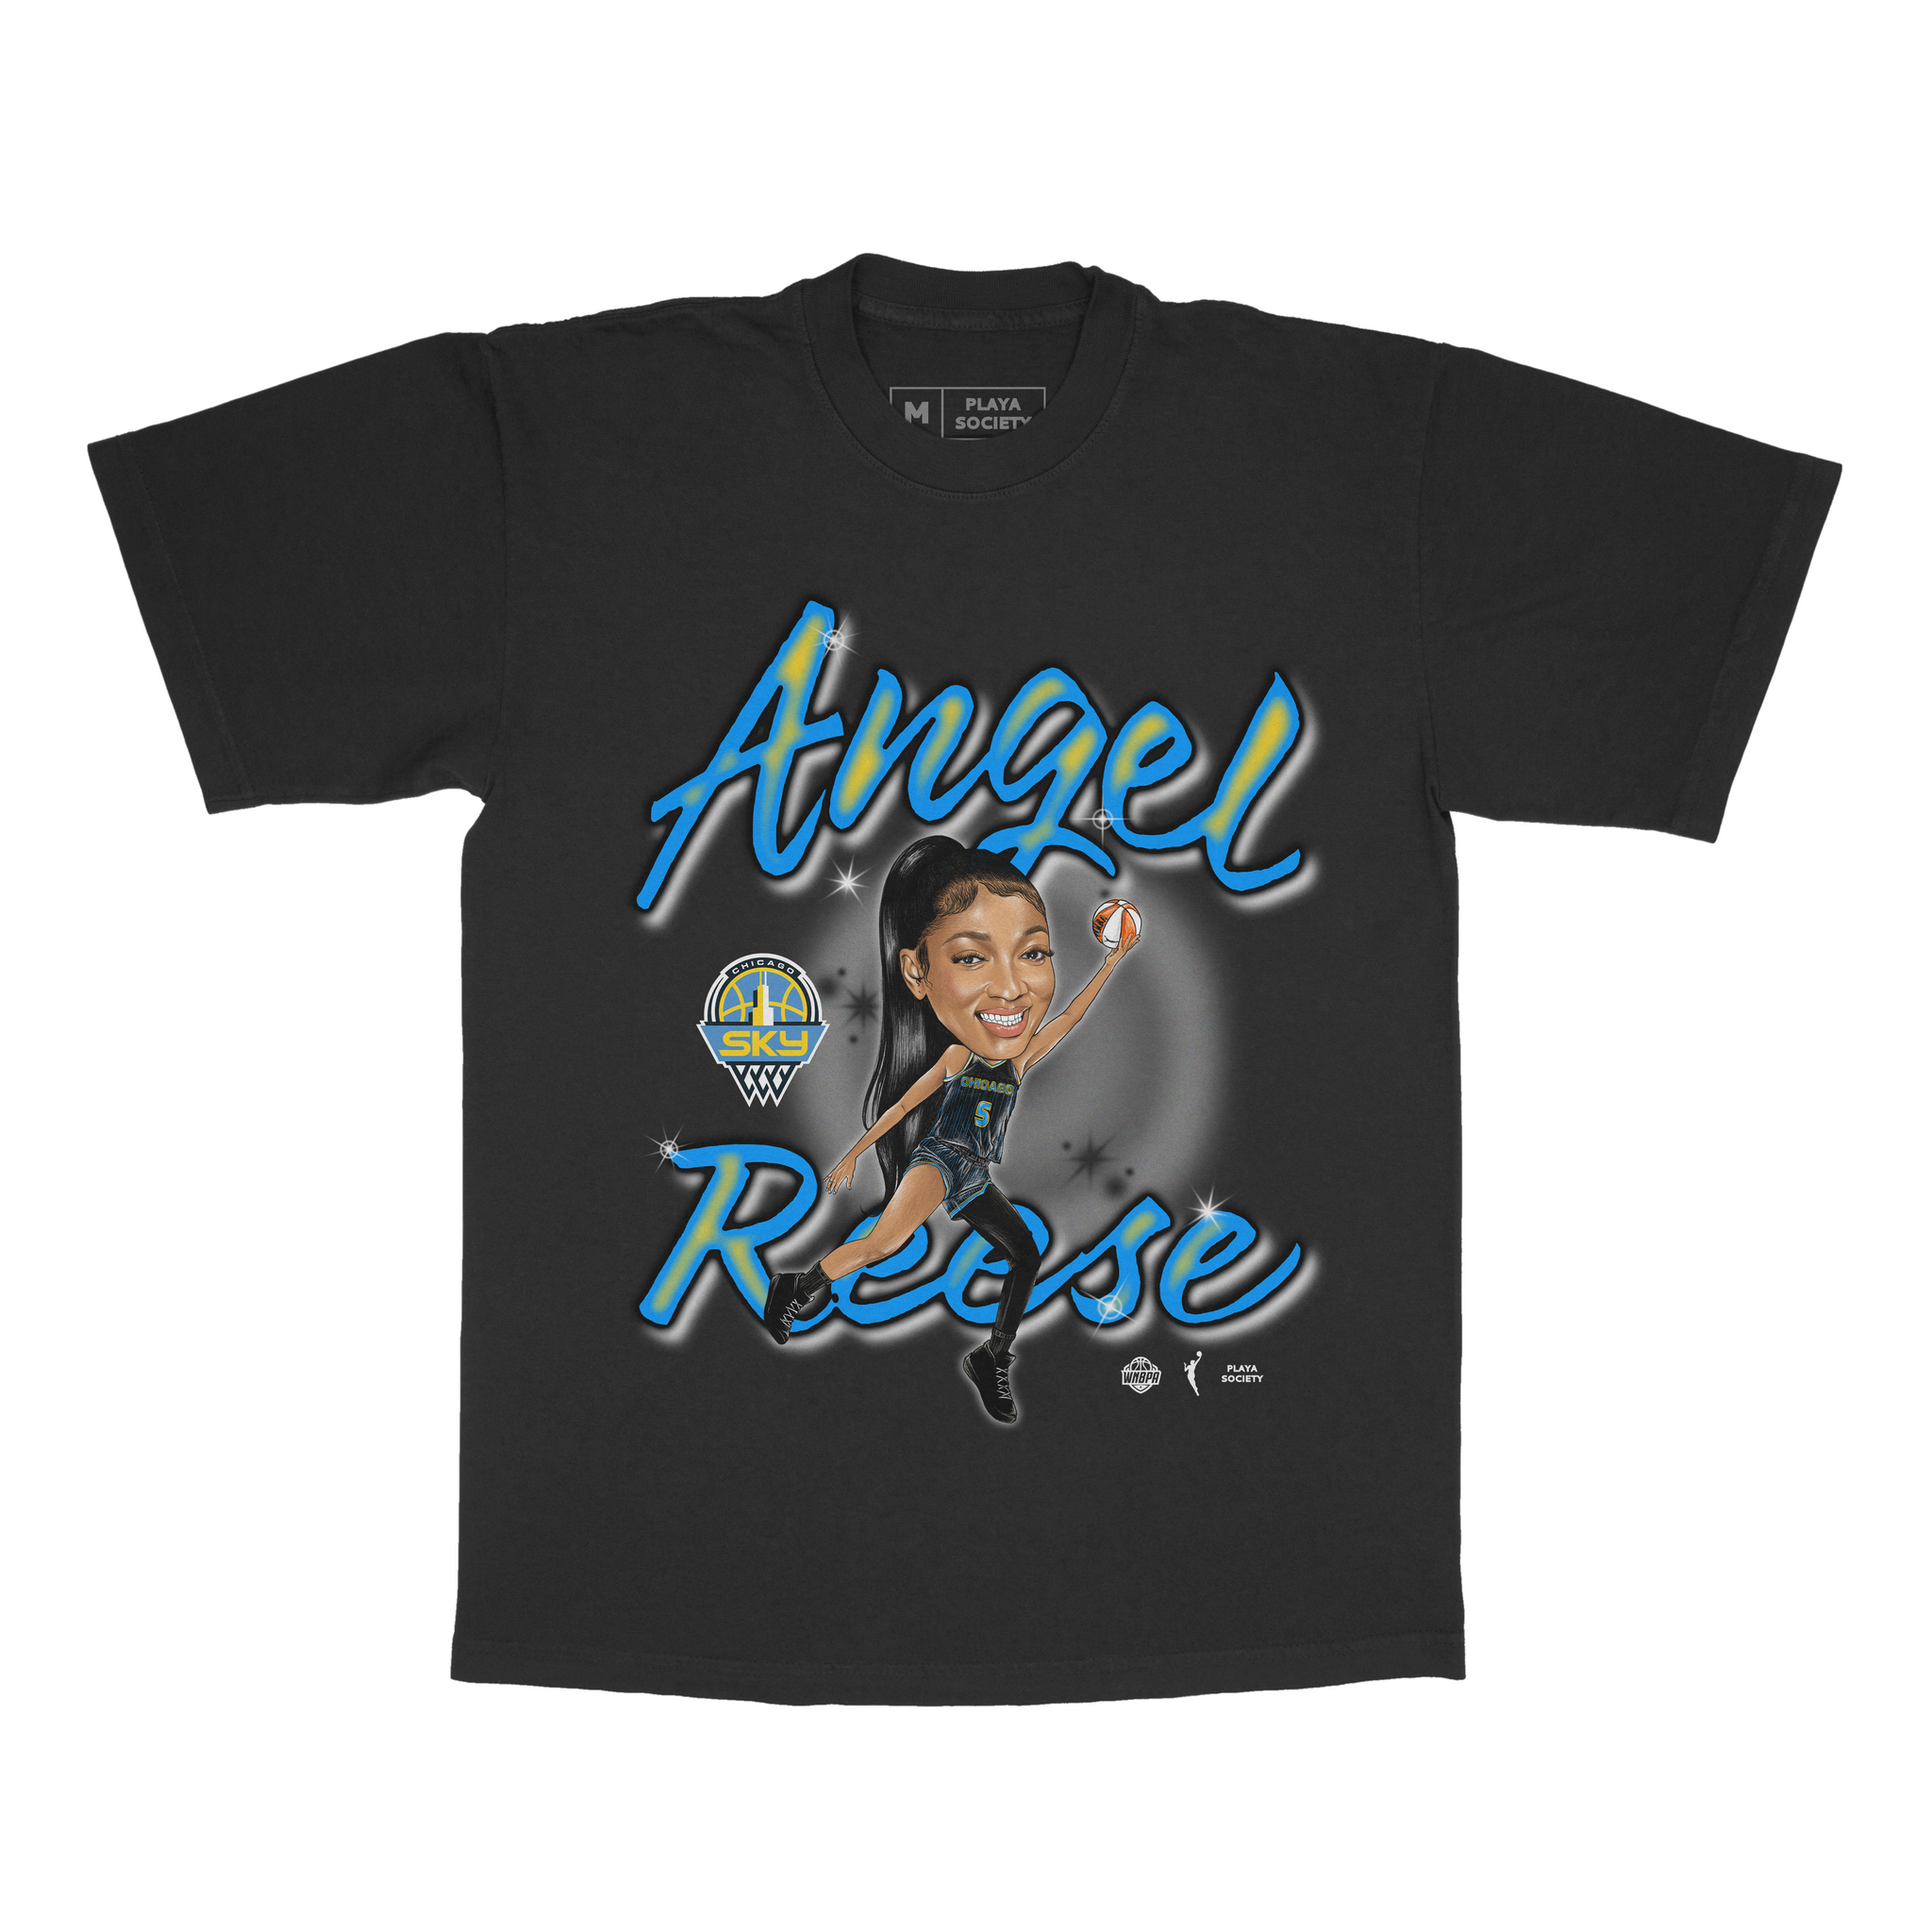 Playa Society Angel Reese T-shirt